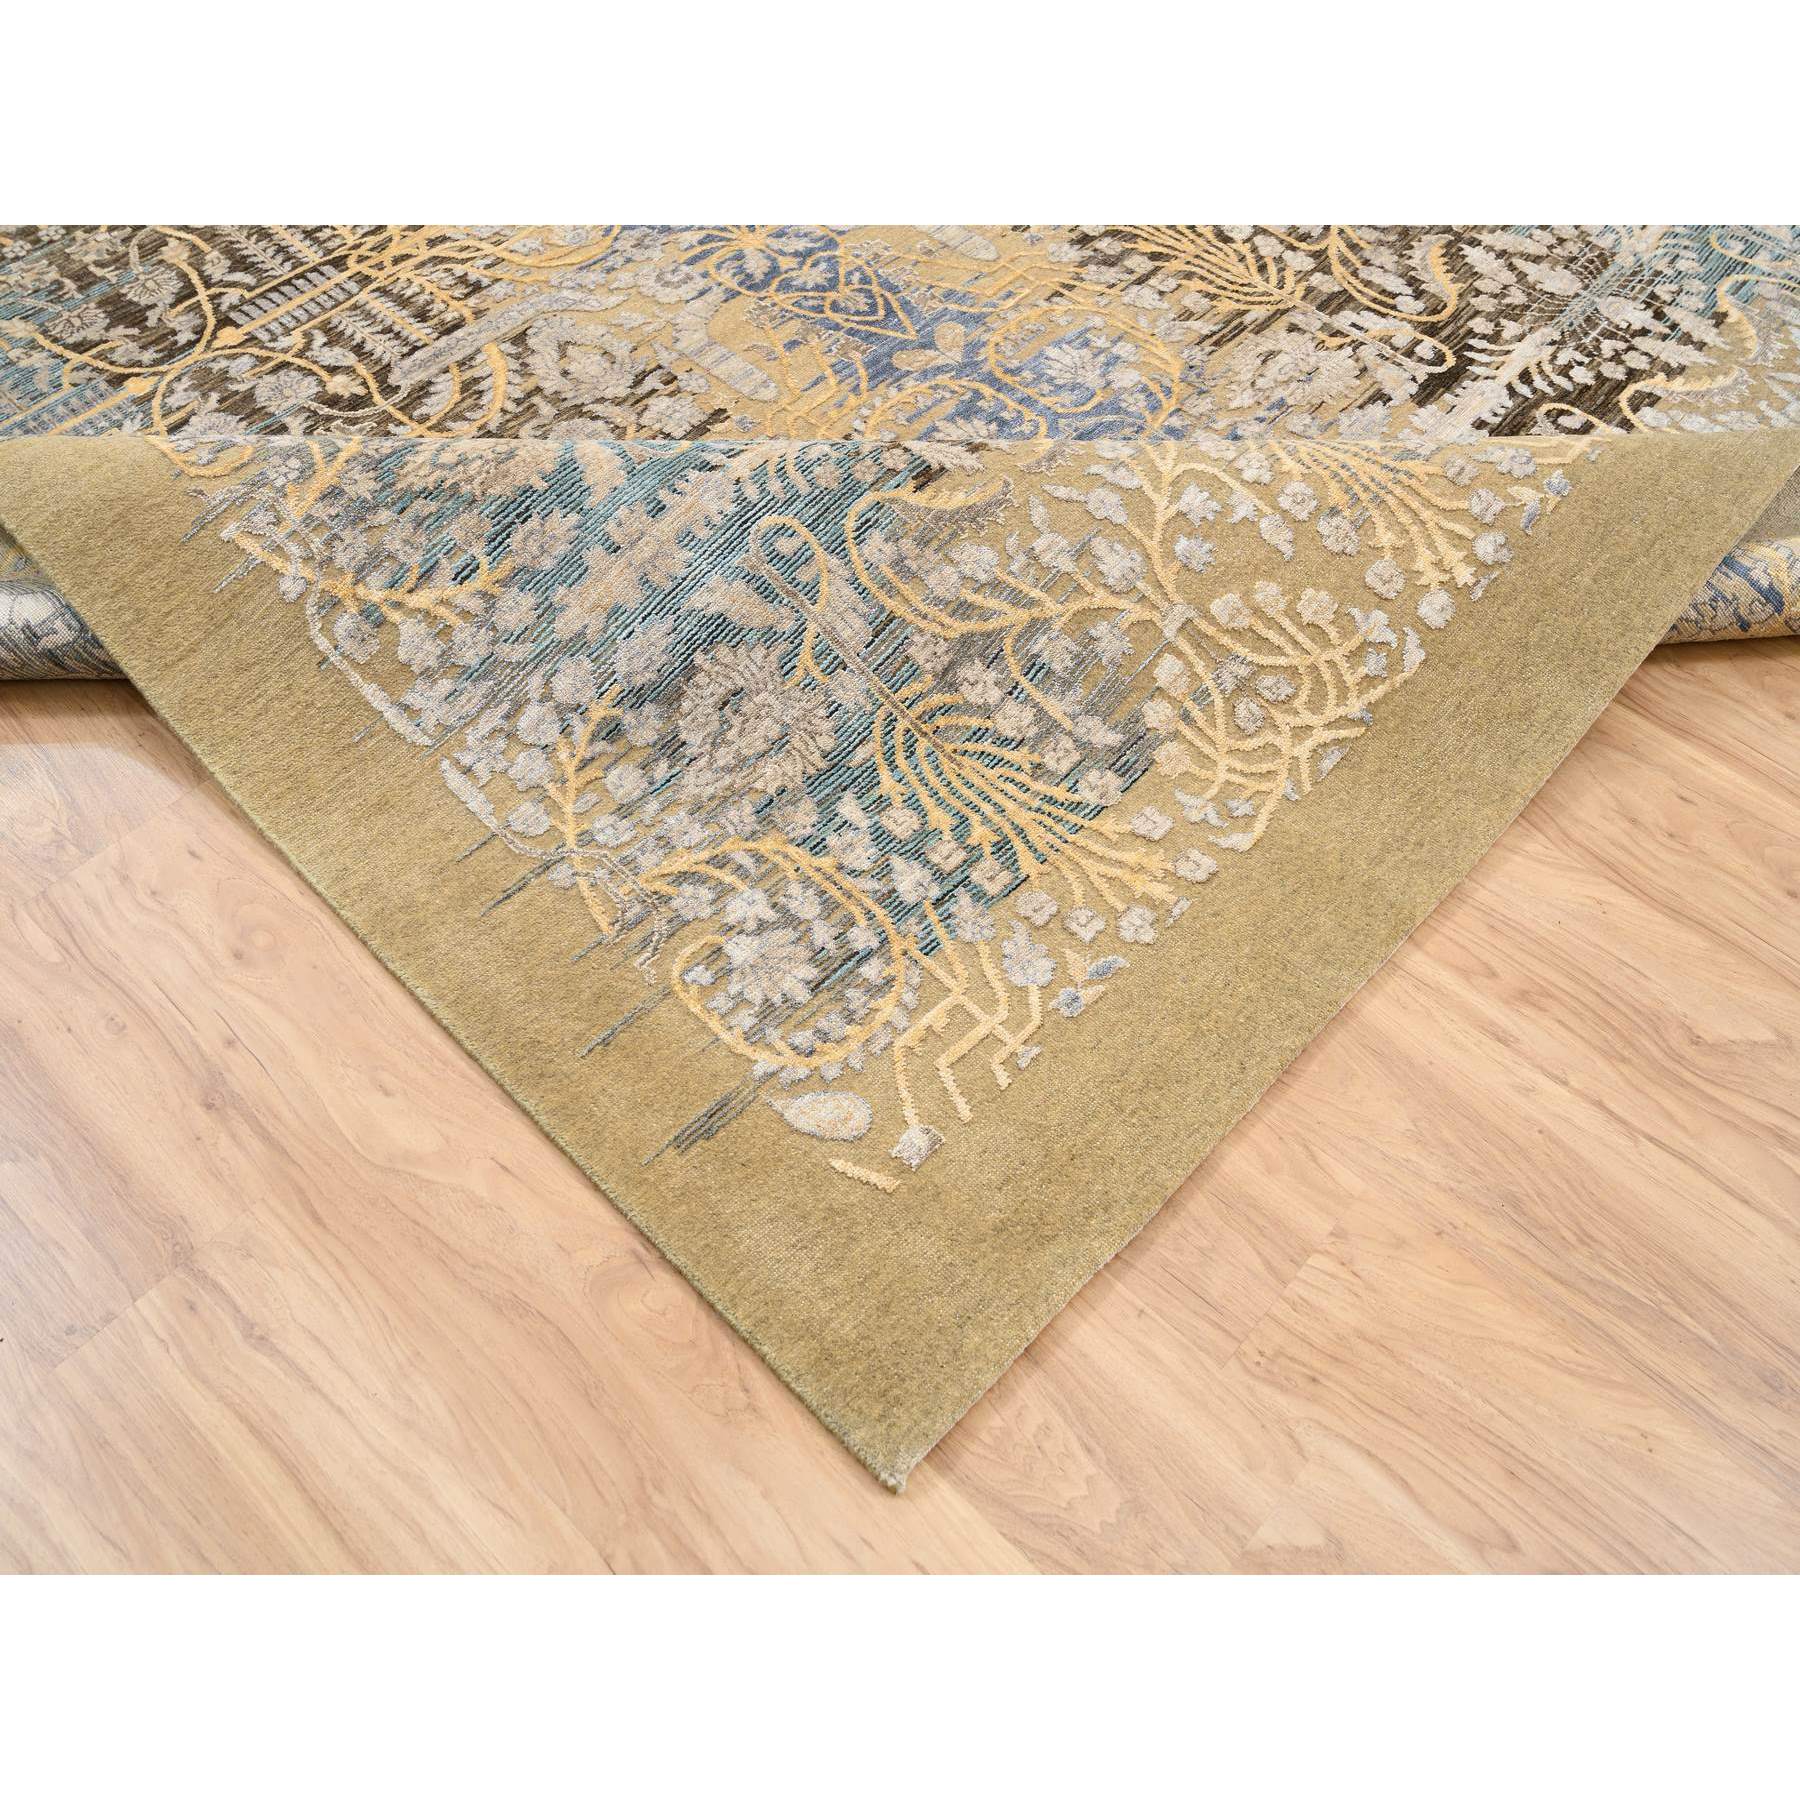 9'x12'2" Honey Brown, Silk With Textured Wool, Hand Woven, Transitional Sarouk, Oriental Rug 